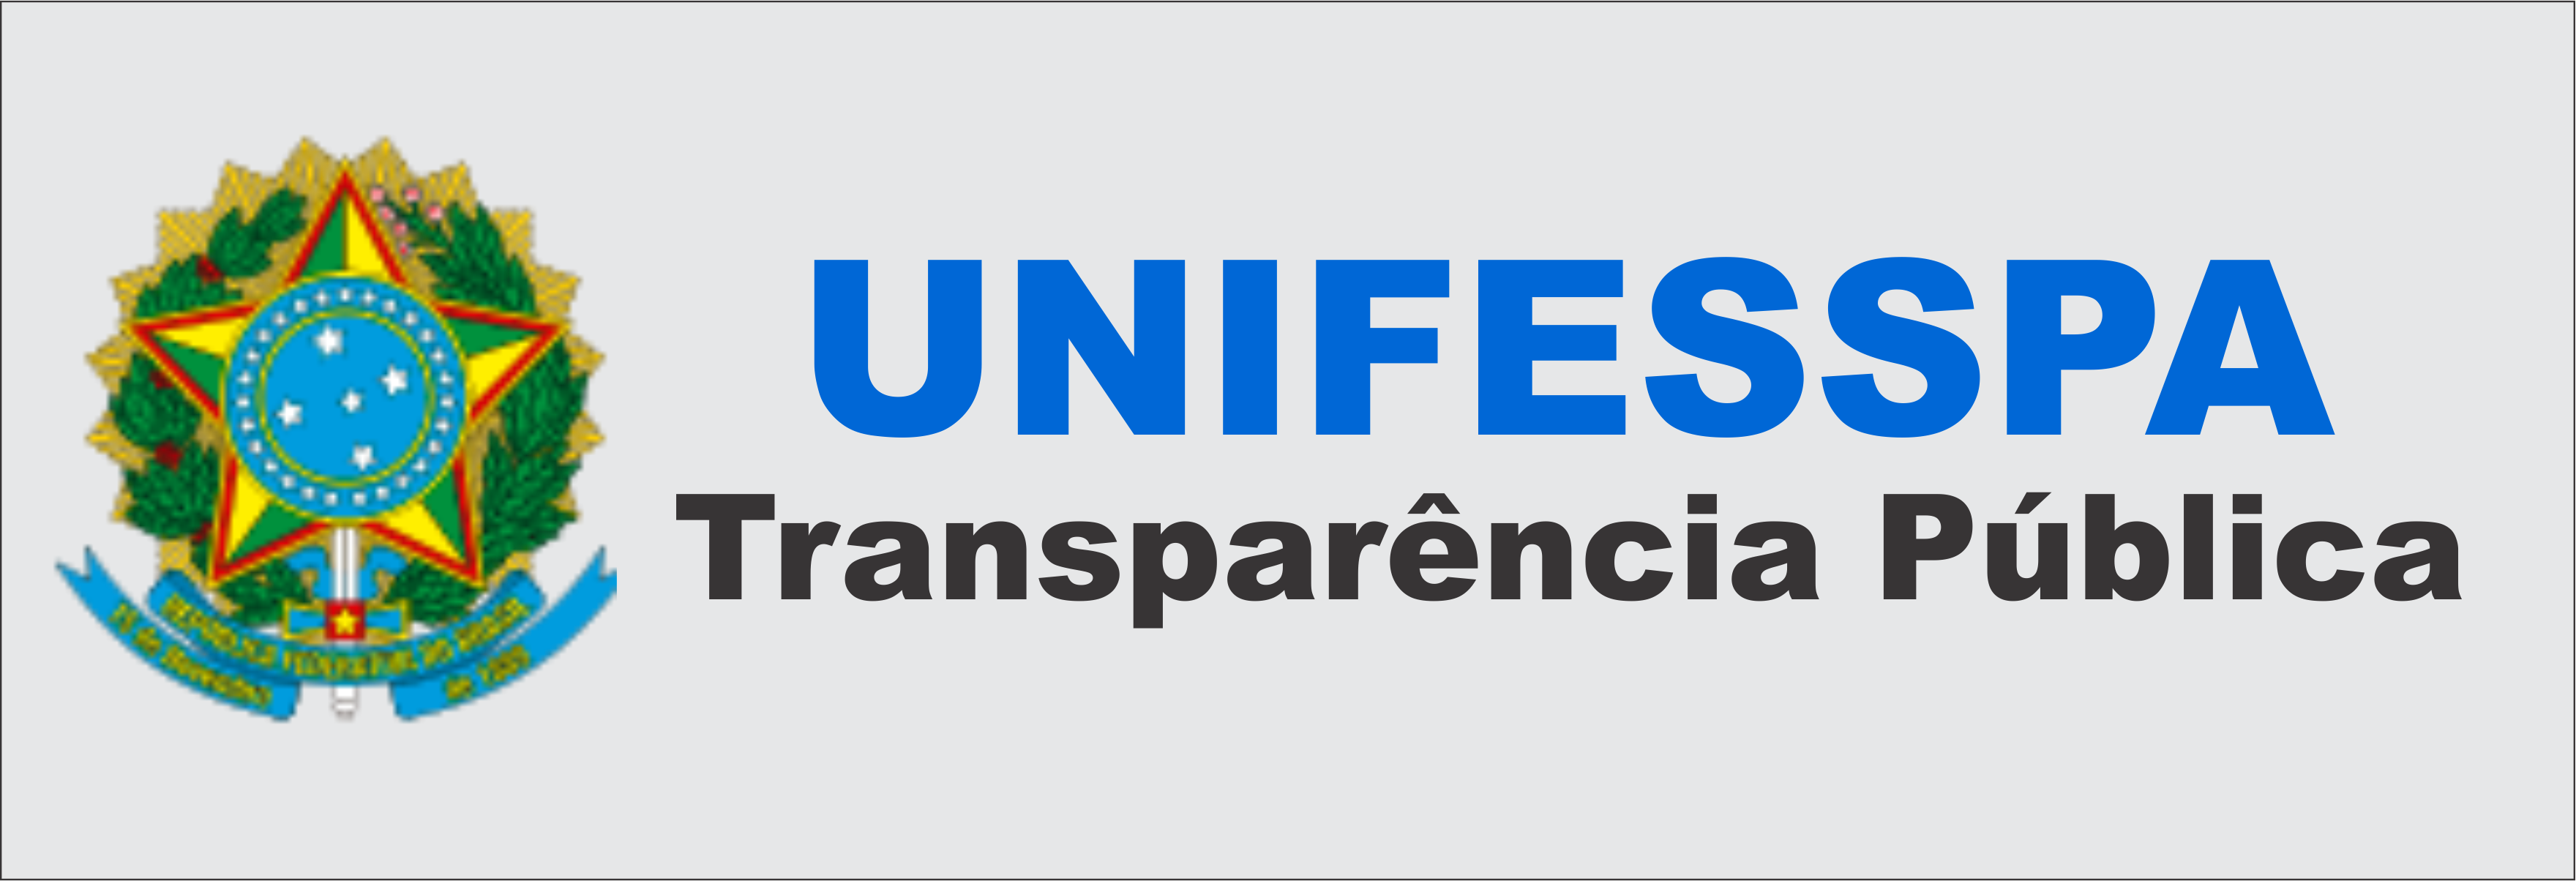 Transparencia Unifesspa